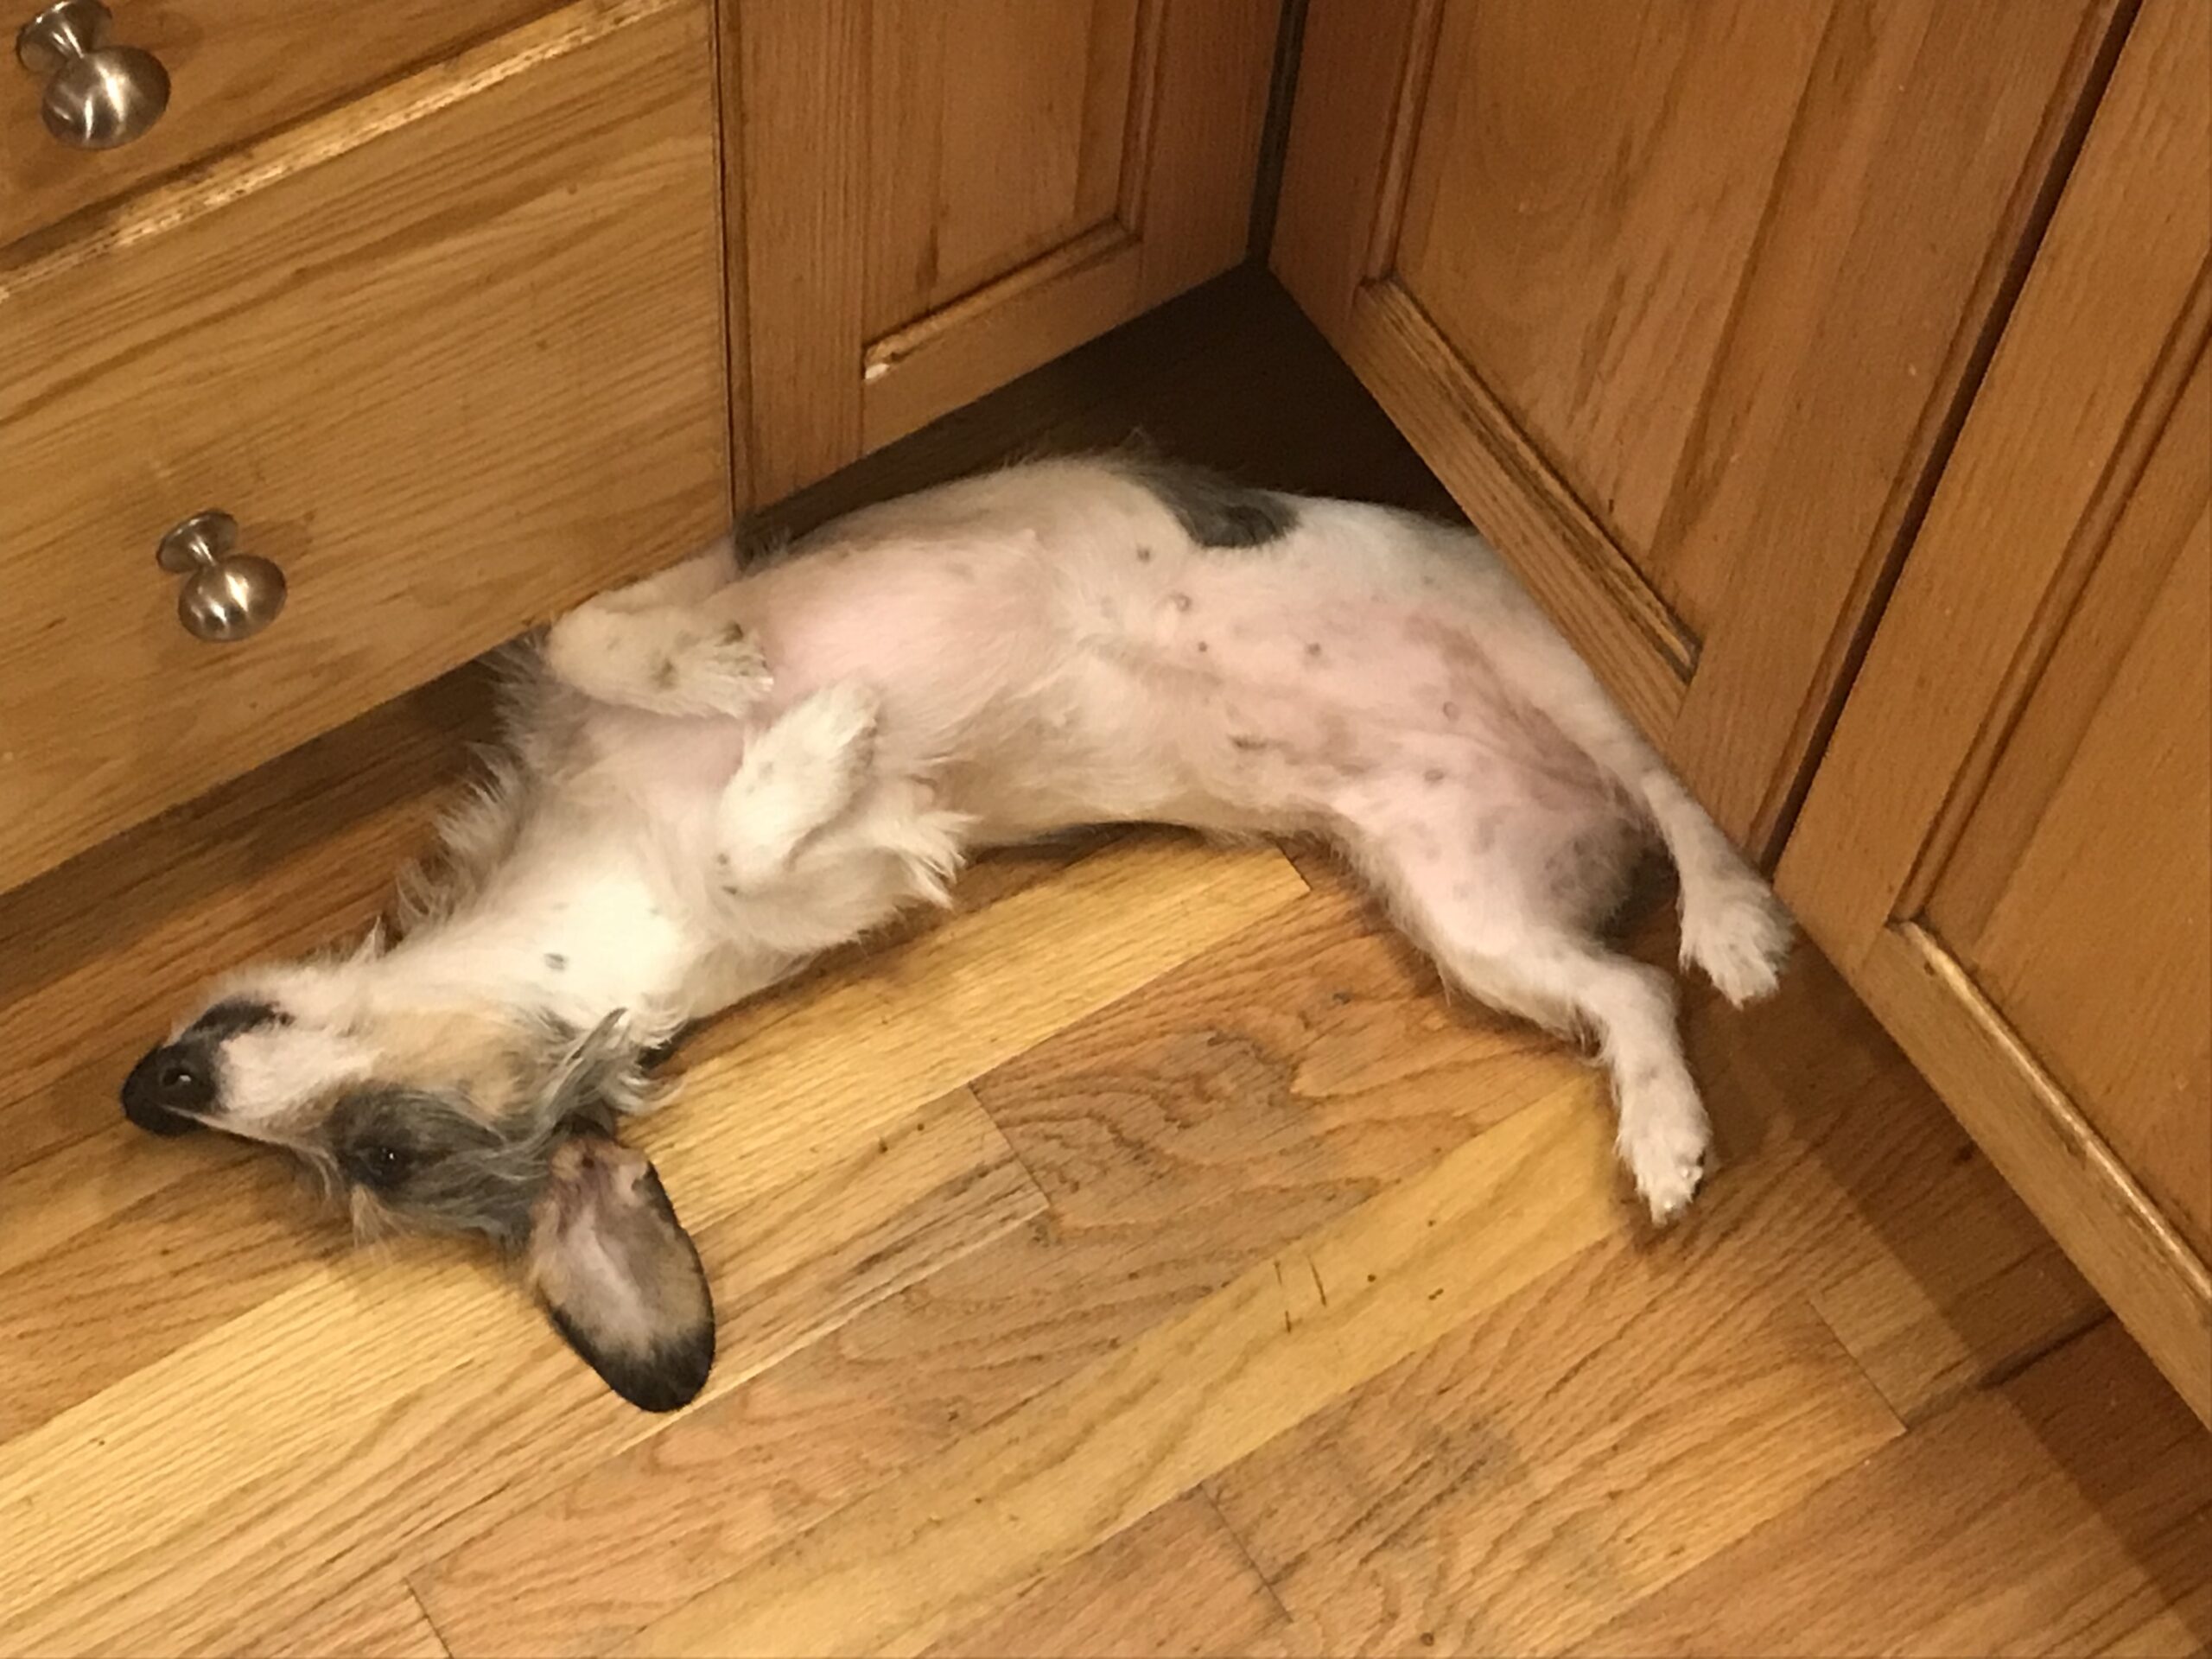 A dog lies on a kitchen floor